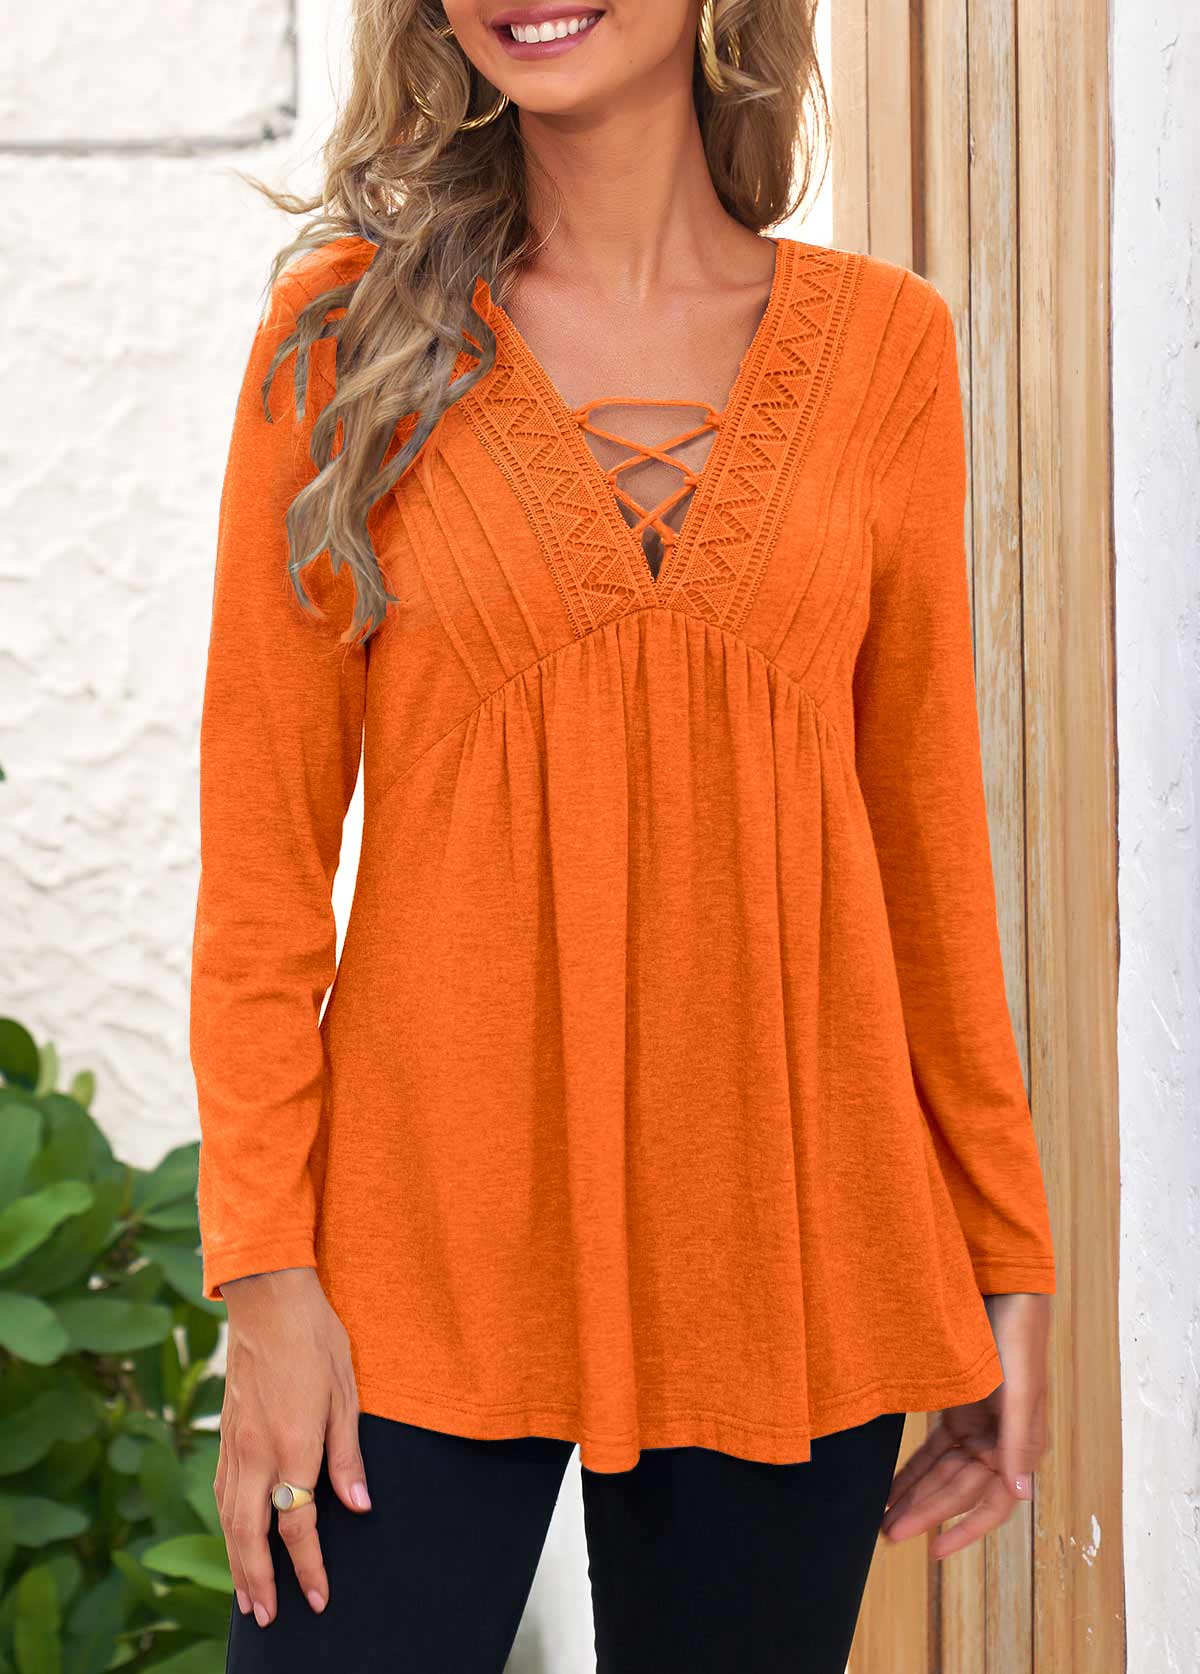 ROTITA Long Sleeve Lace Stitching Orange T Shirt